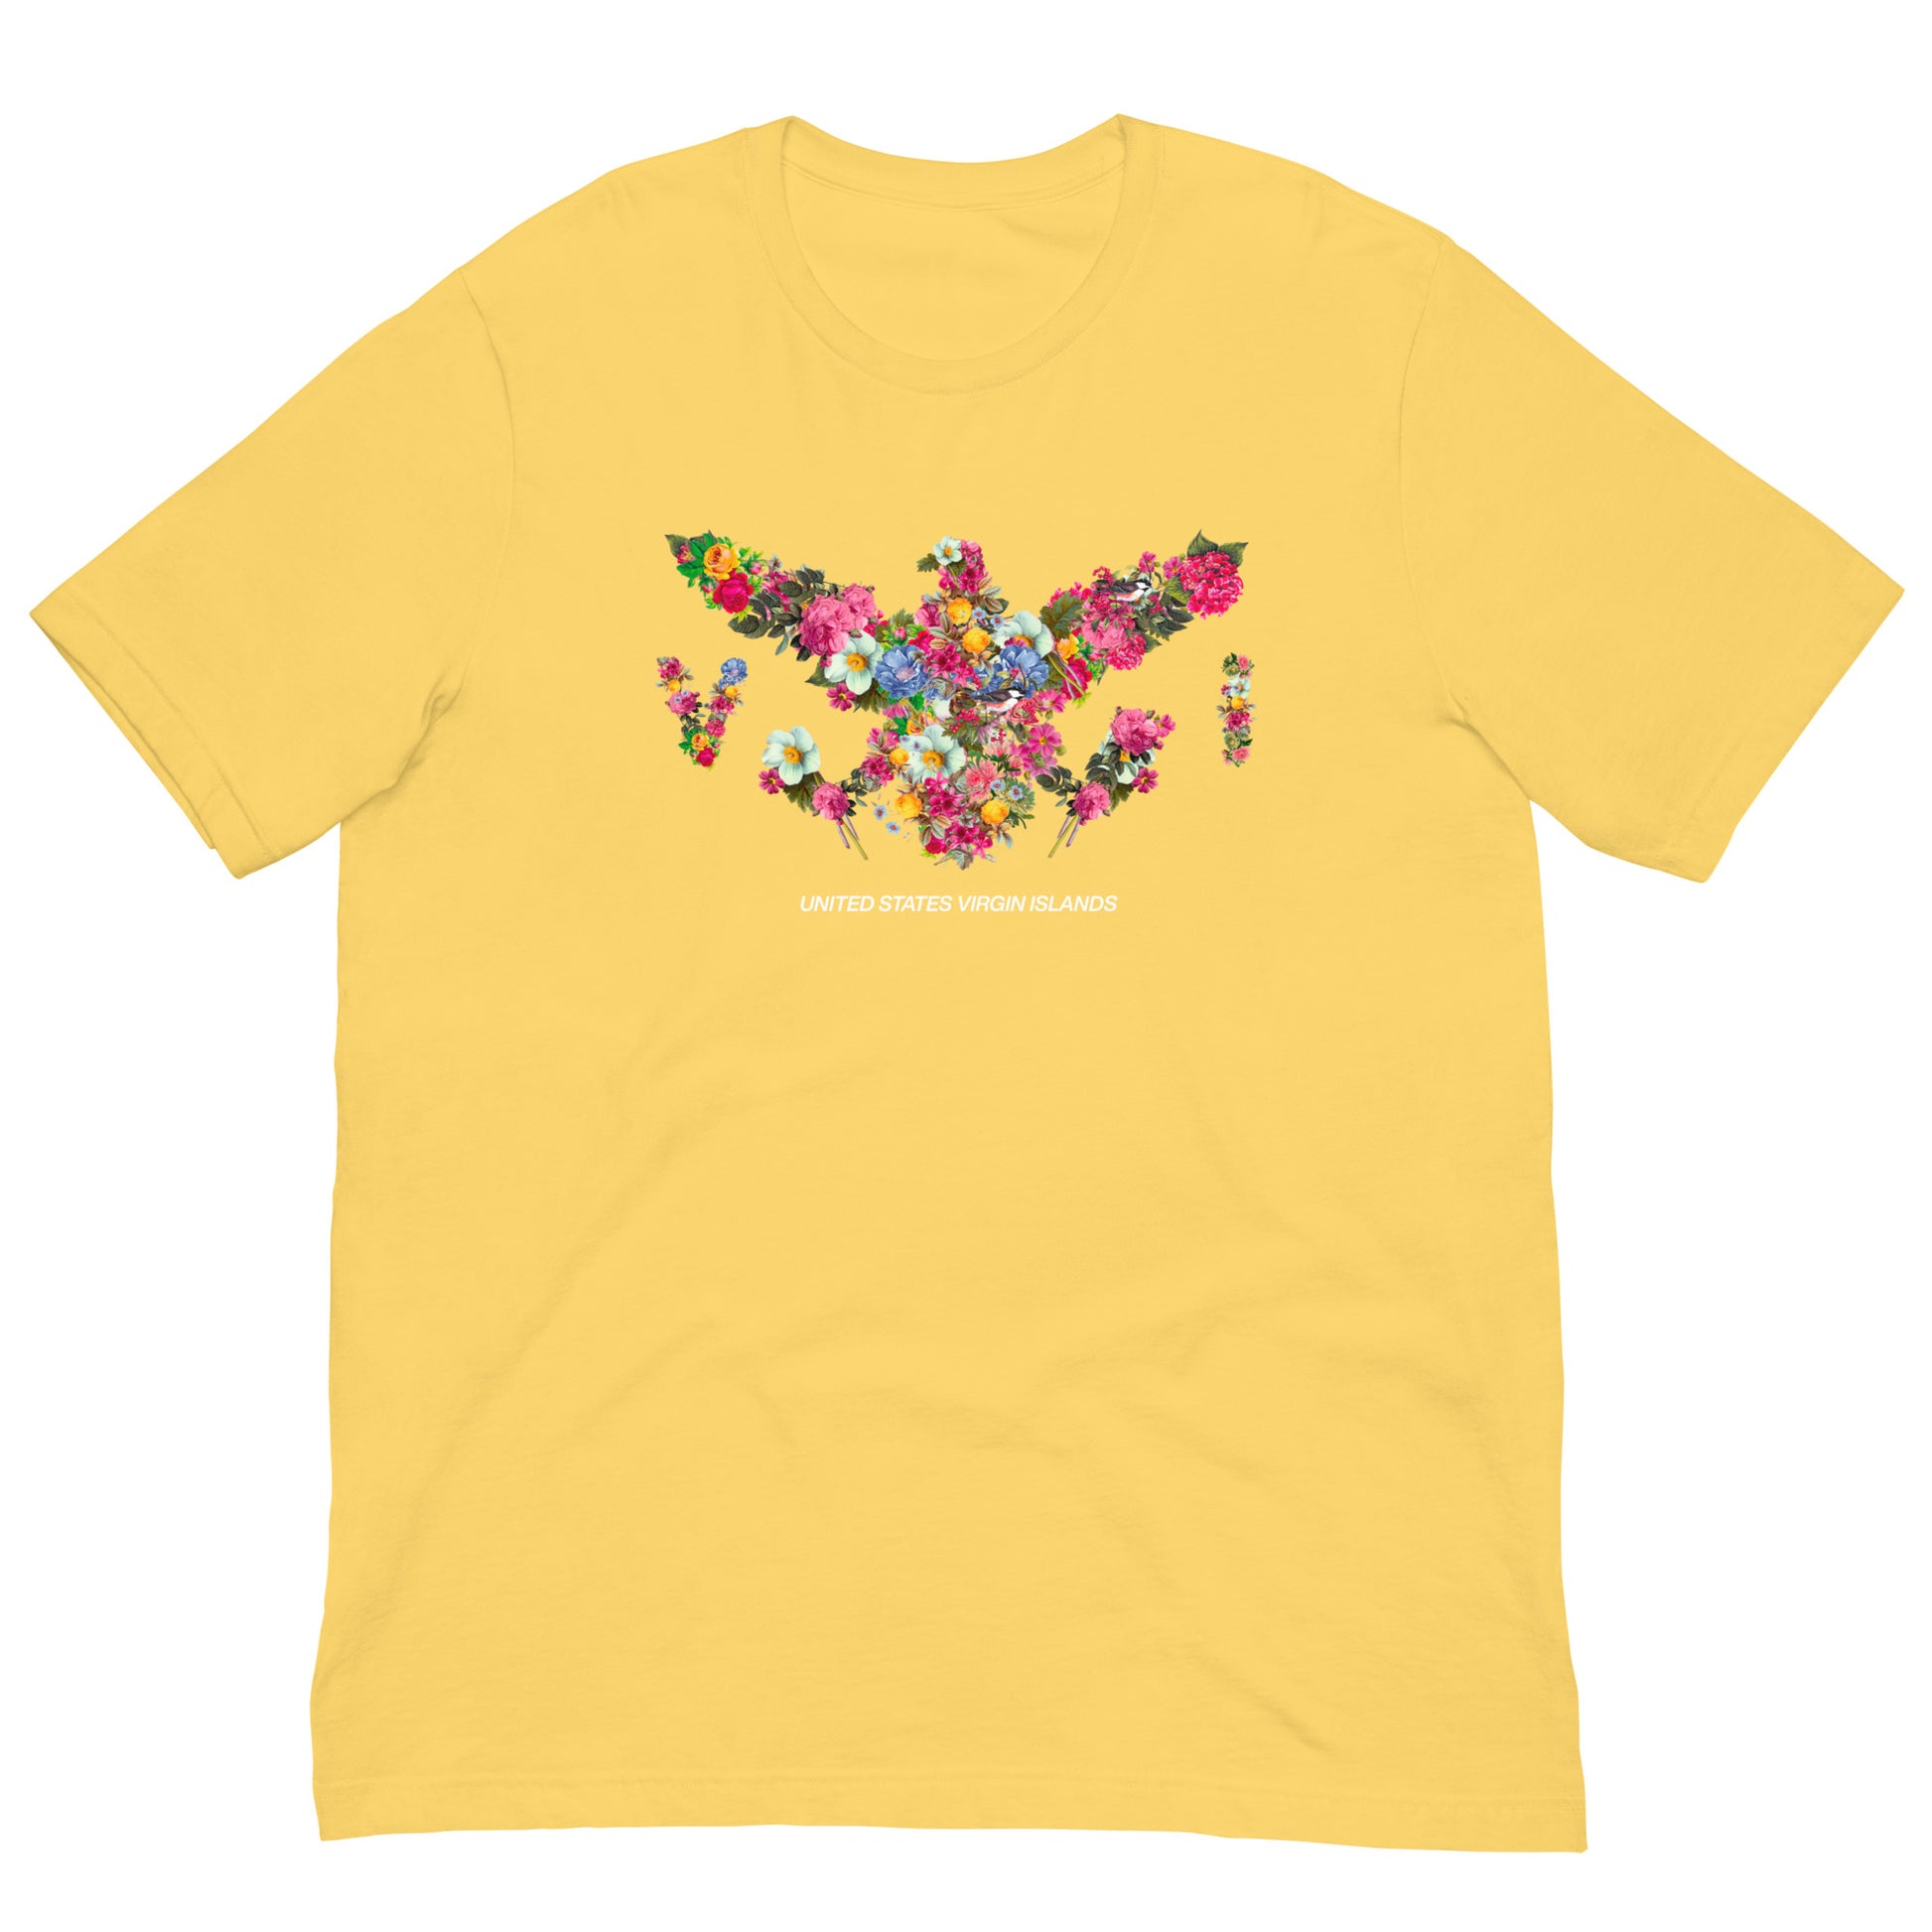 Virgin Islands Flowers Shirt | Phade Fashion Virgin Islands